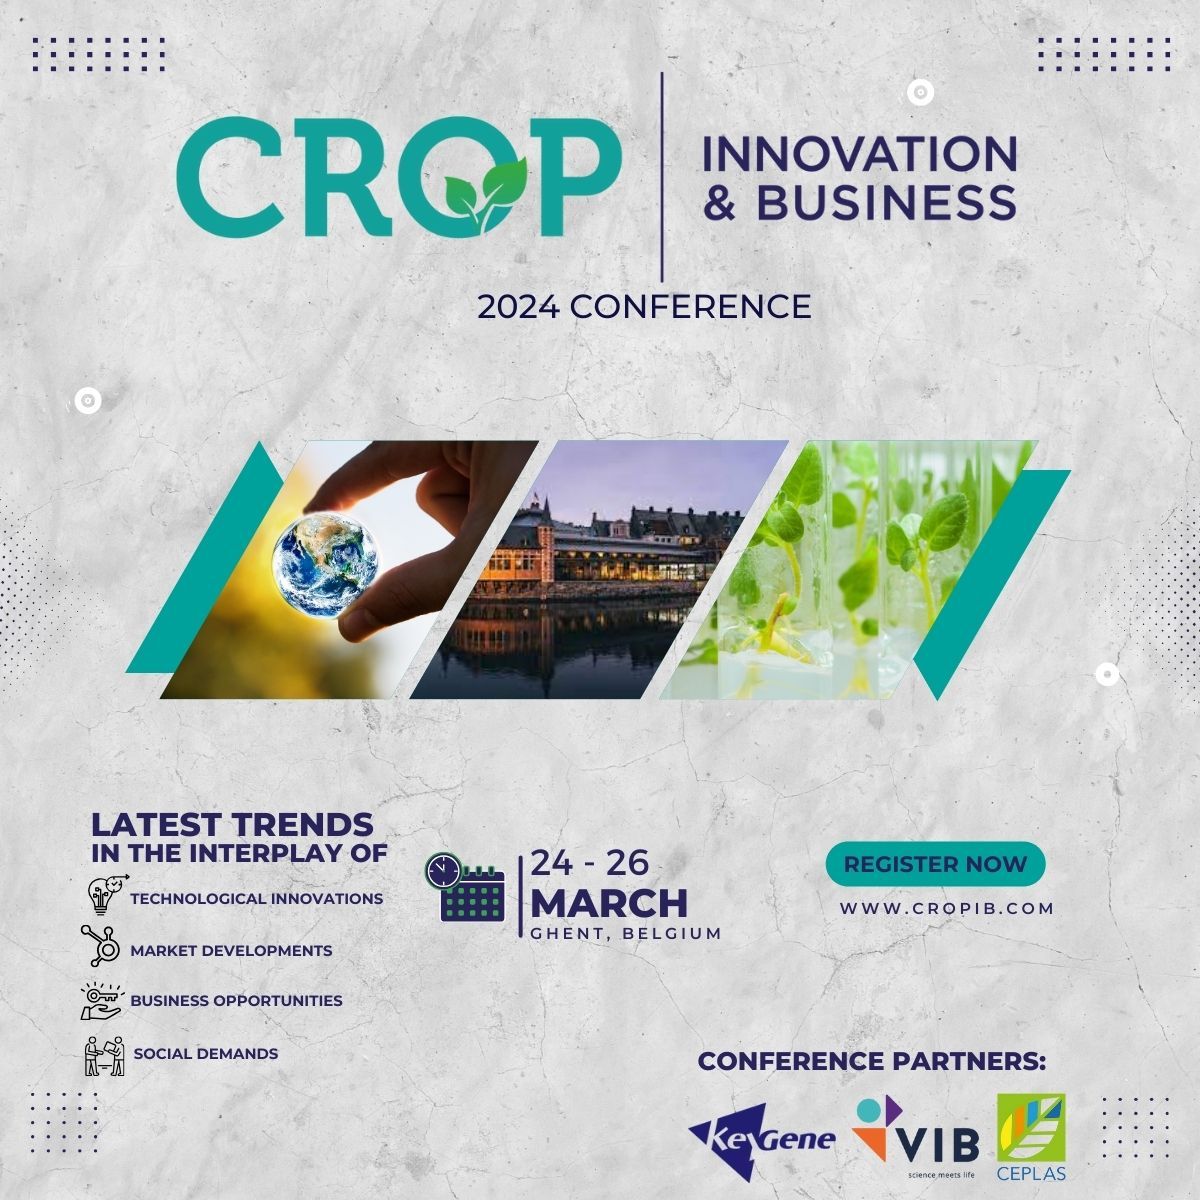 Crop Innovation & Business 2024